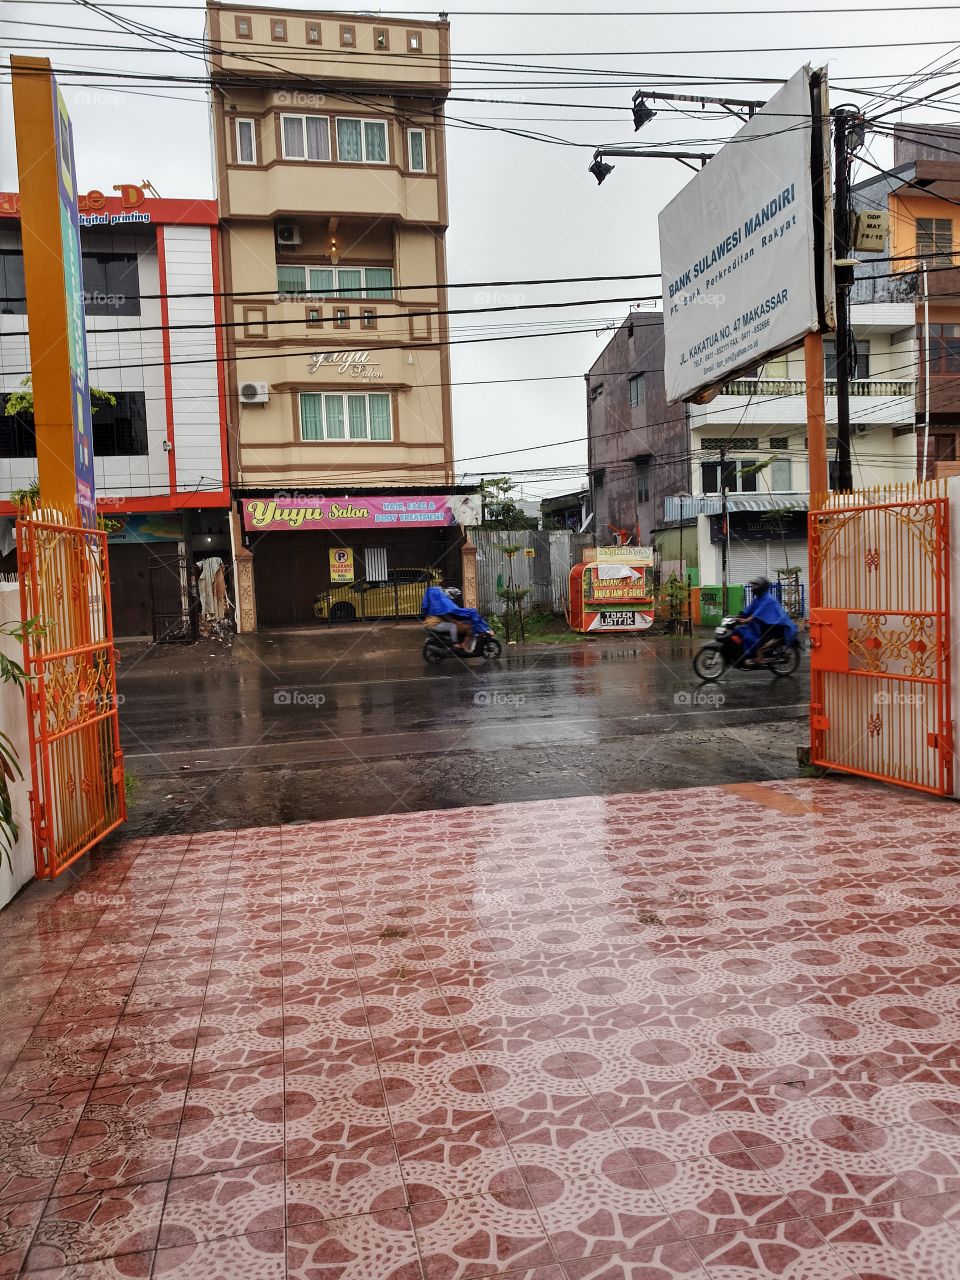 Rain the morning